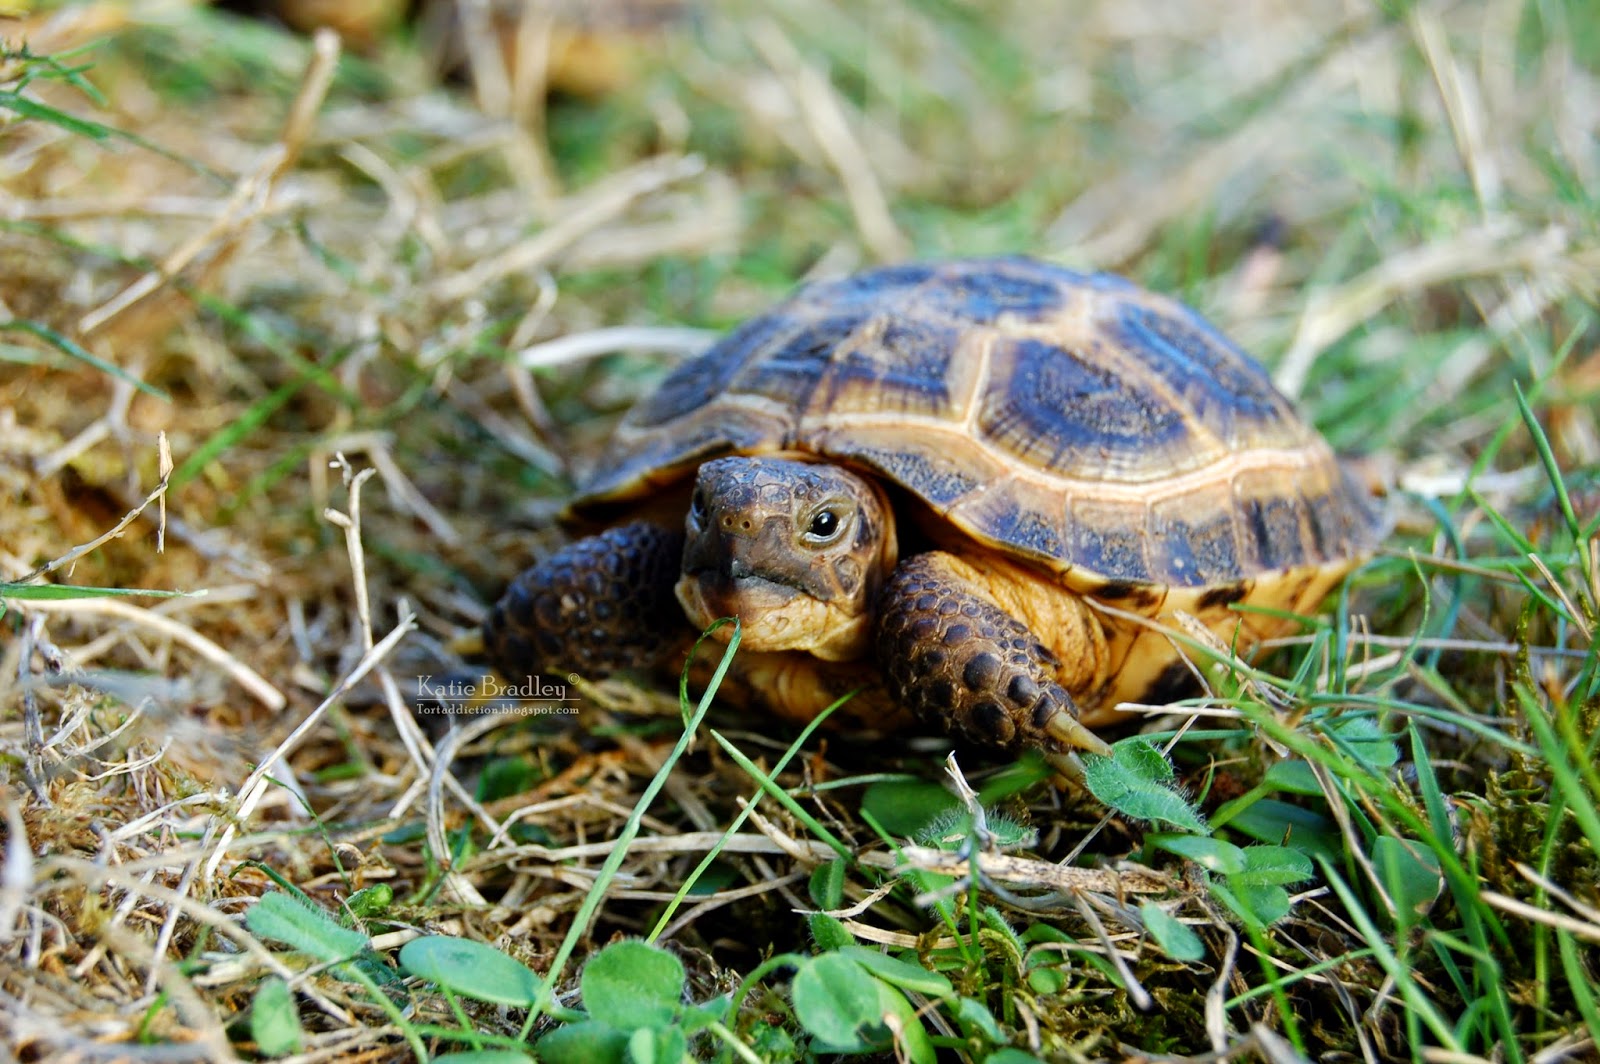 Russian Tortoise Facts | Anatomy, Diet, Habitat, Behavior - Animals Time1600 x 1064